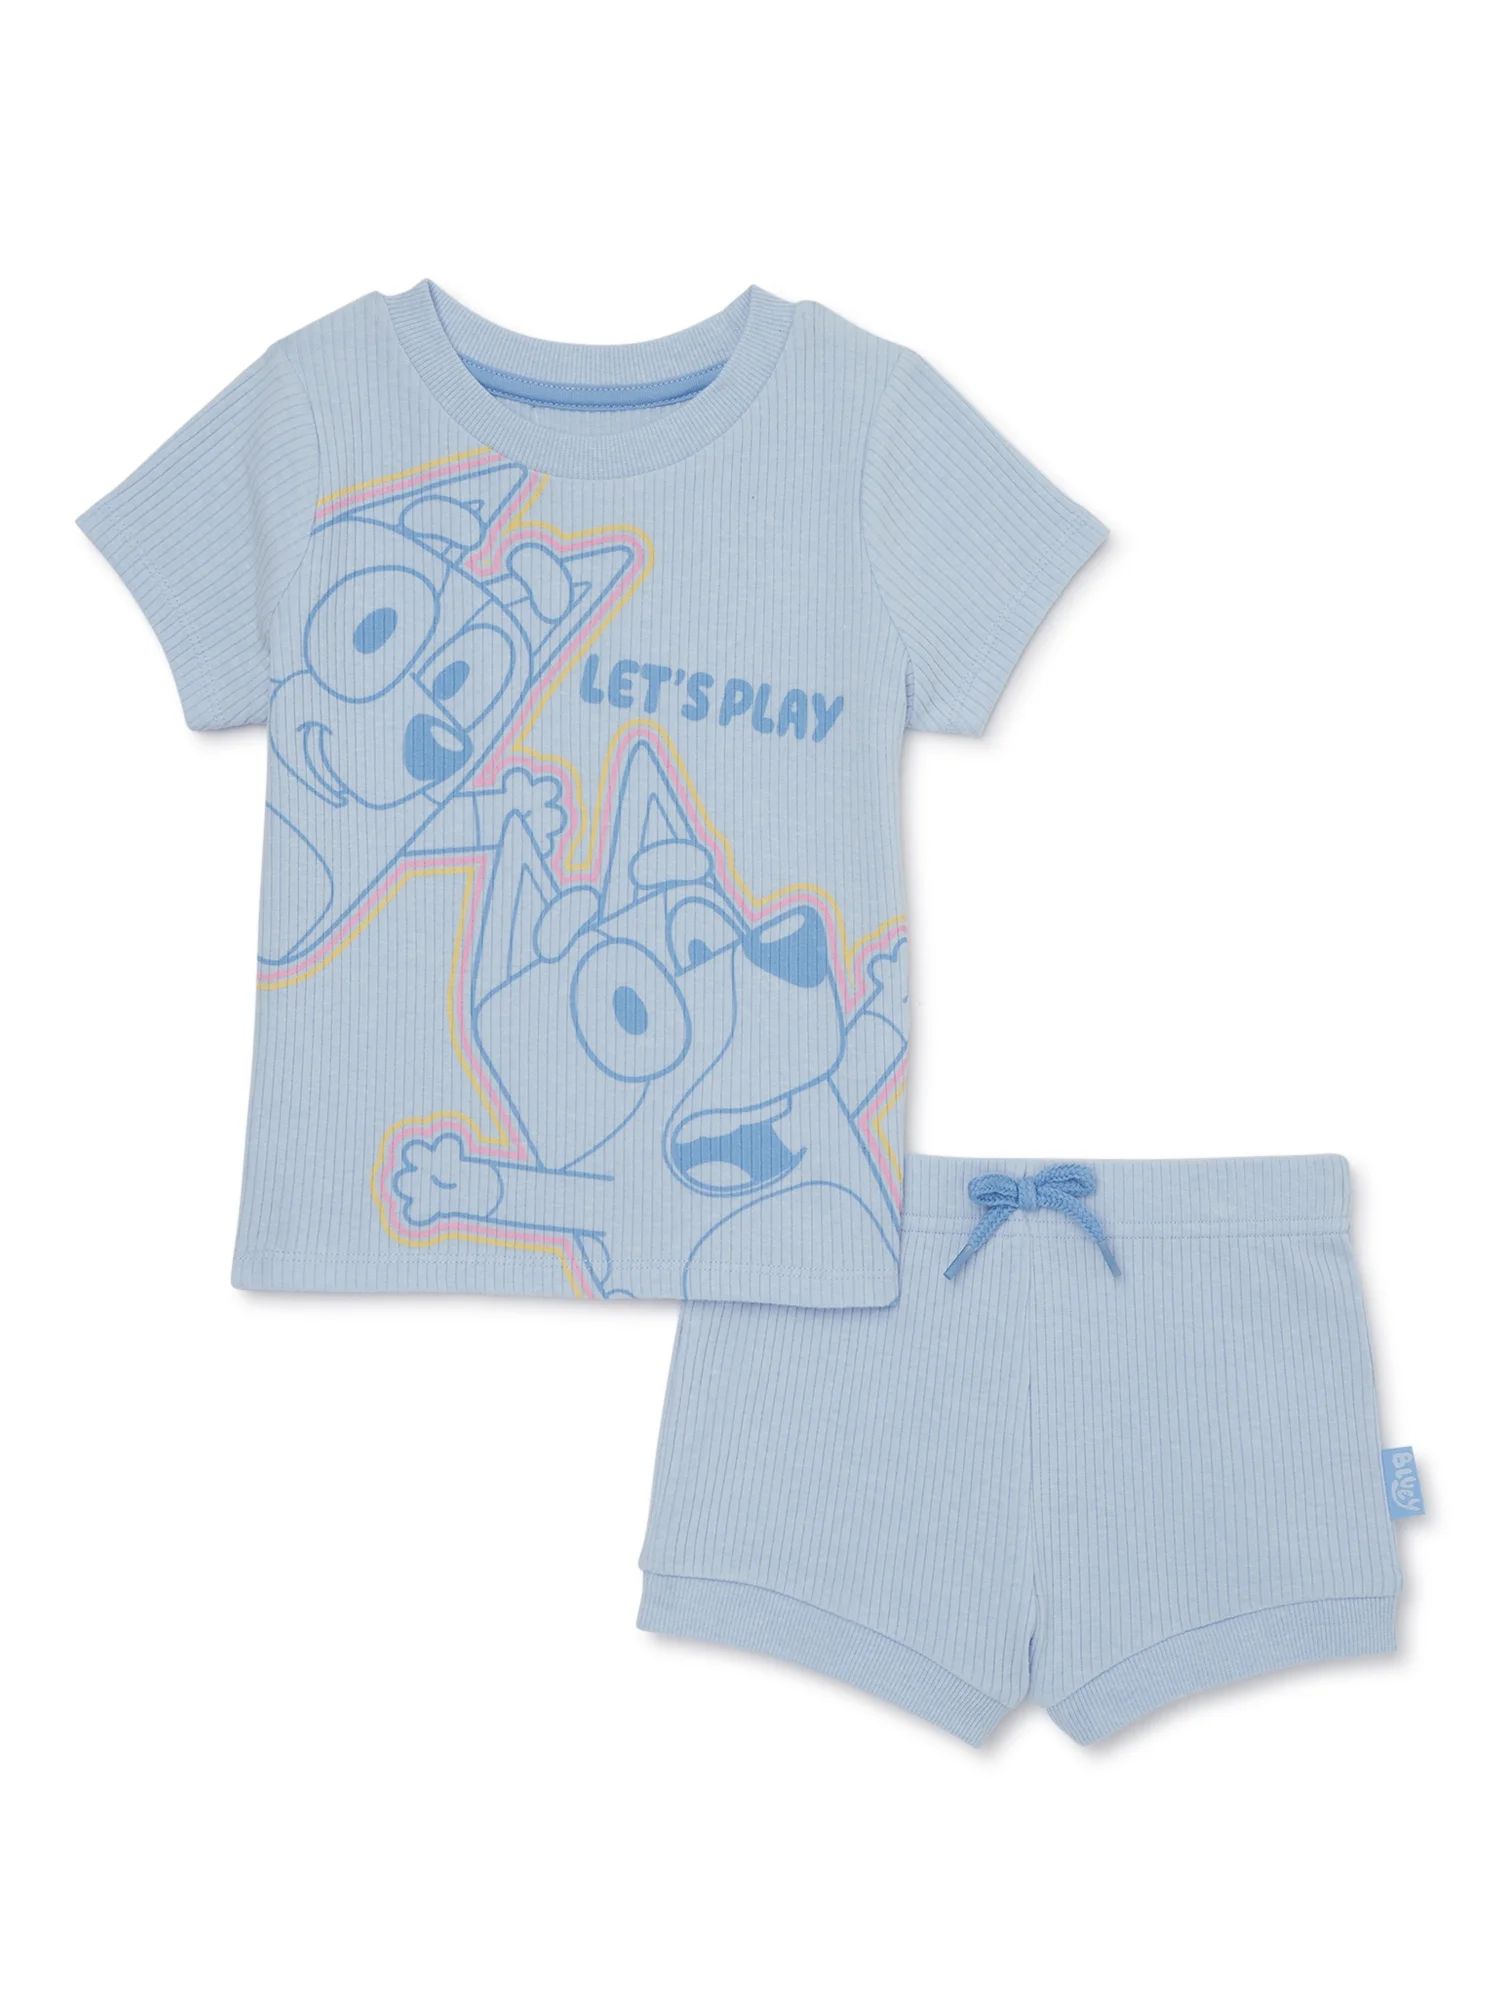 Bluey Toddler Girls Tee and Ribbed Shorts Set, 2-Piece, Sizes 2T-5T | Walmart (US)